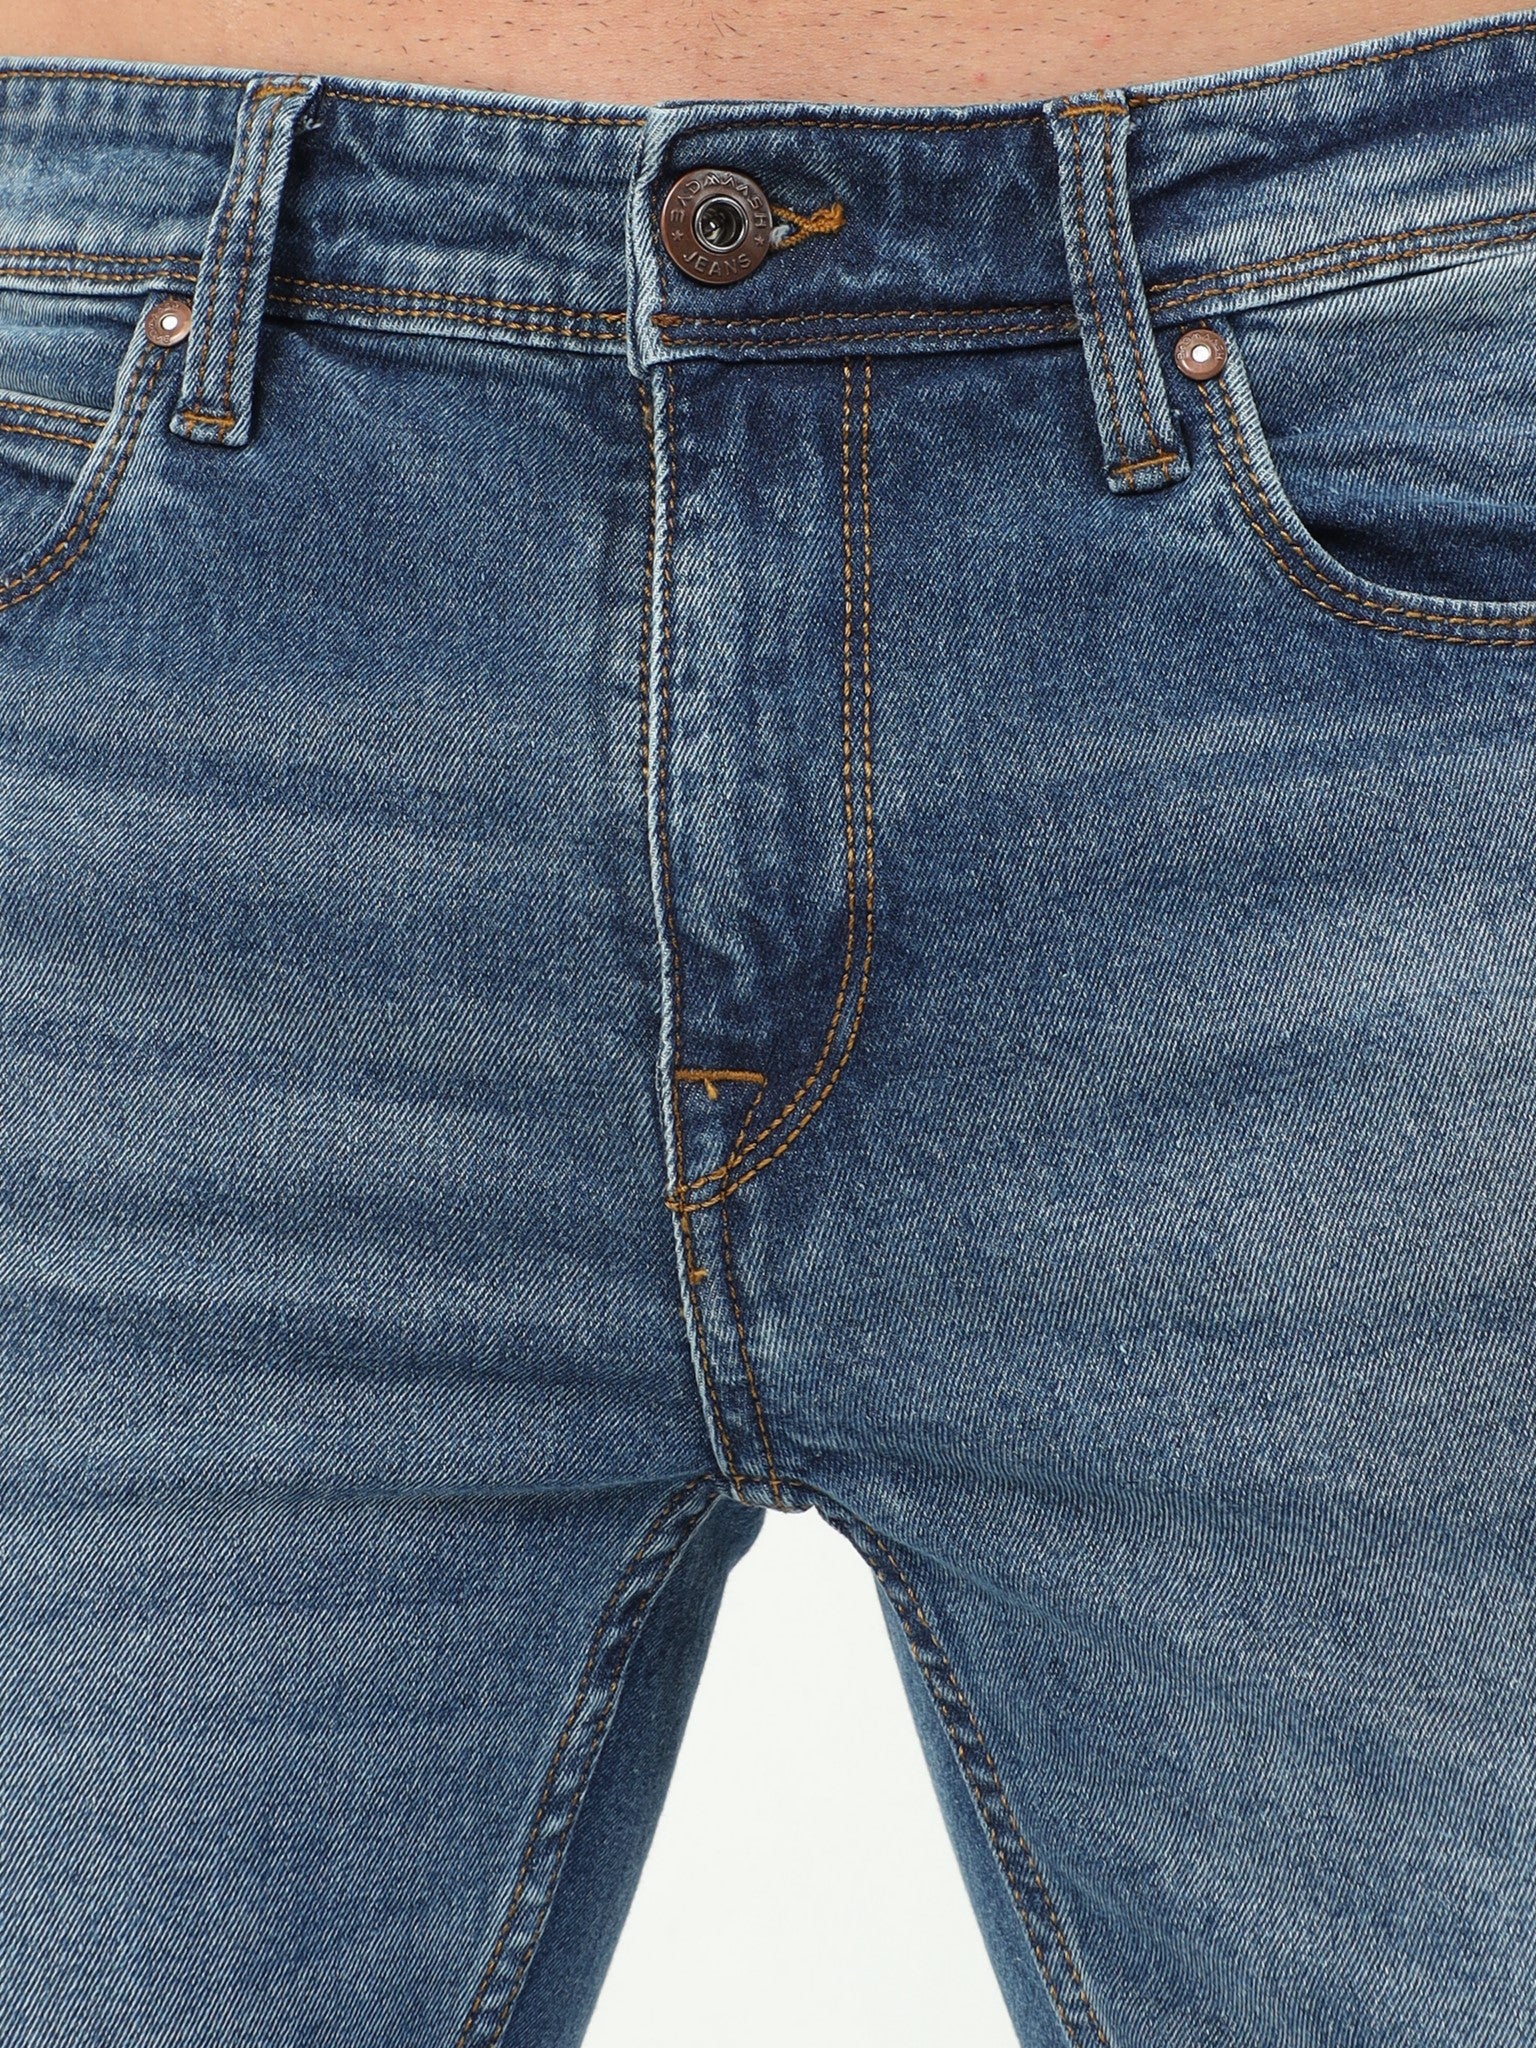 Midblue Slim Fit Jeans for Men